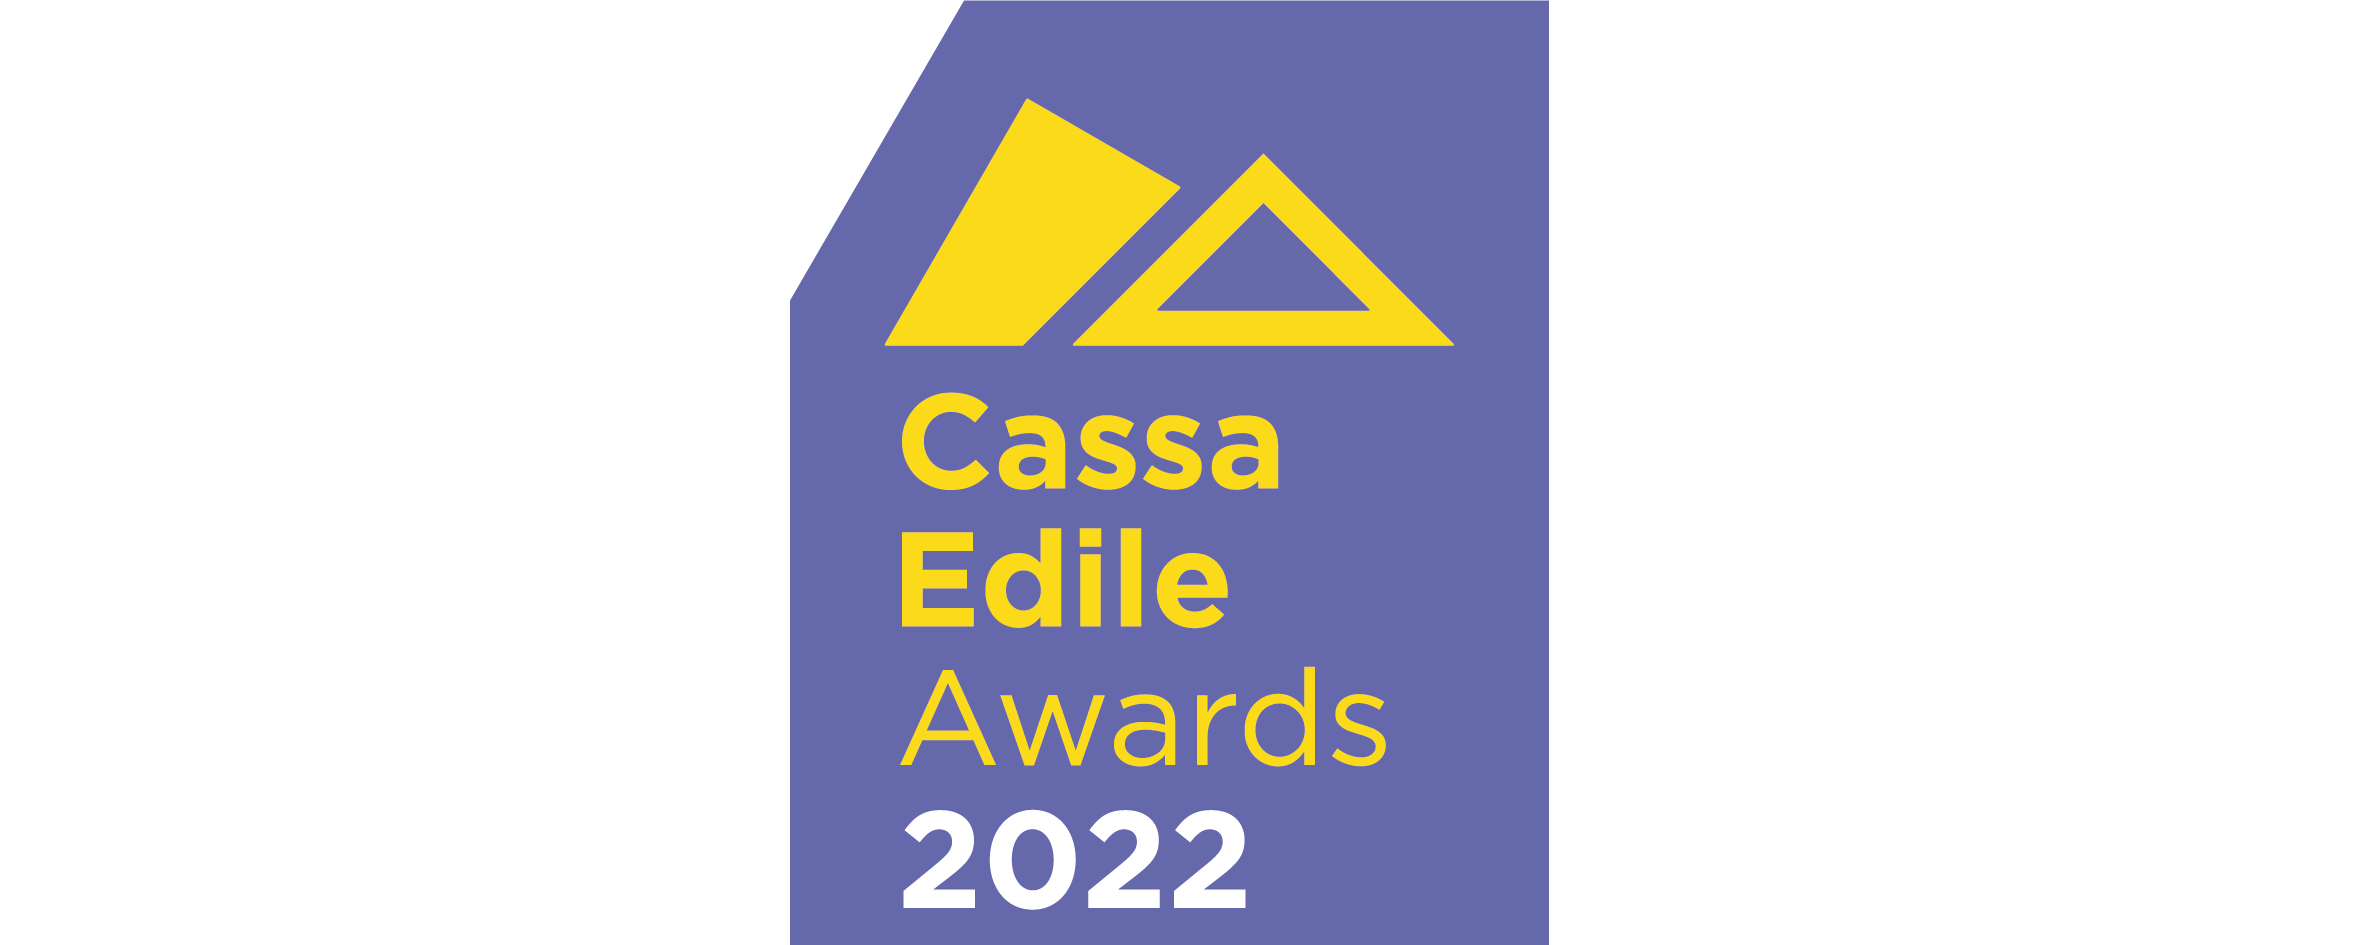 CASSA EDILE AWARDS 2022: SOLESI S.P.A. VINCE IL RICONOSCIMENTO PER DUE CATEGORIE